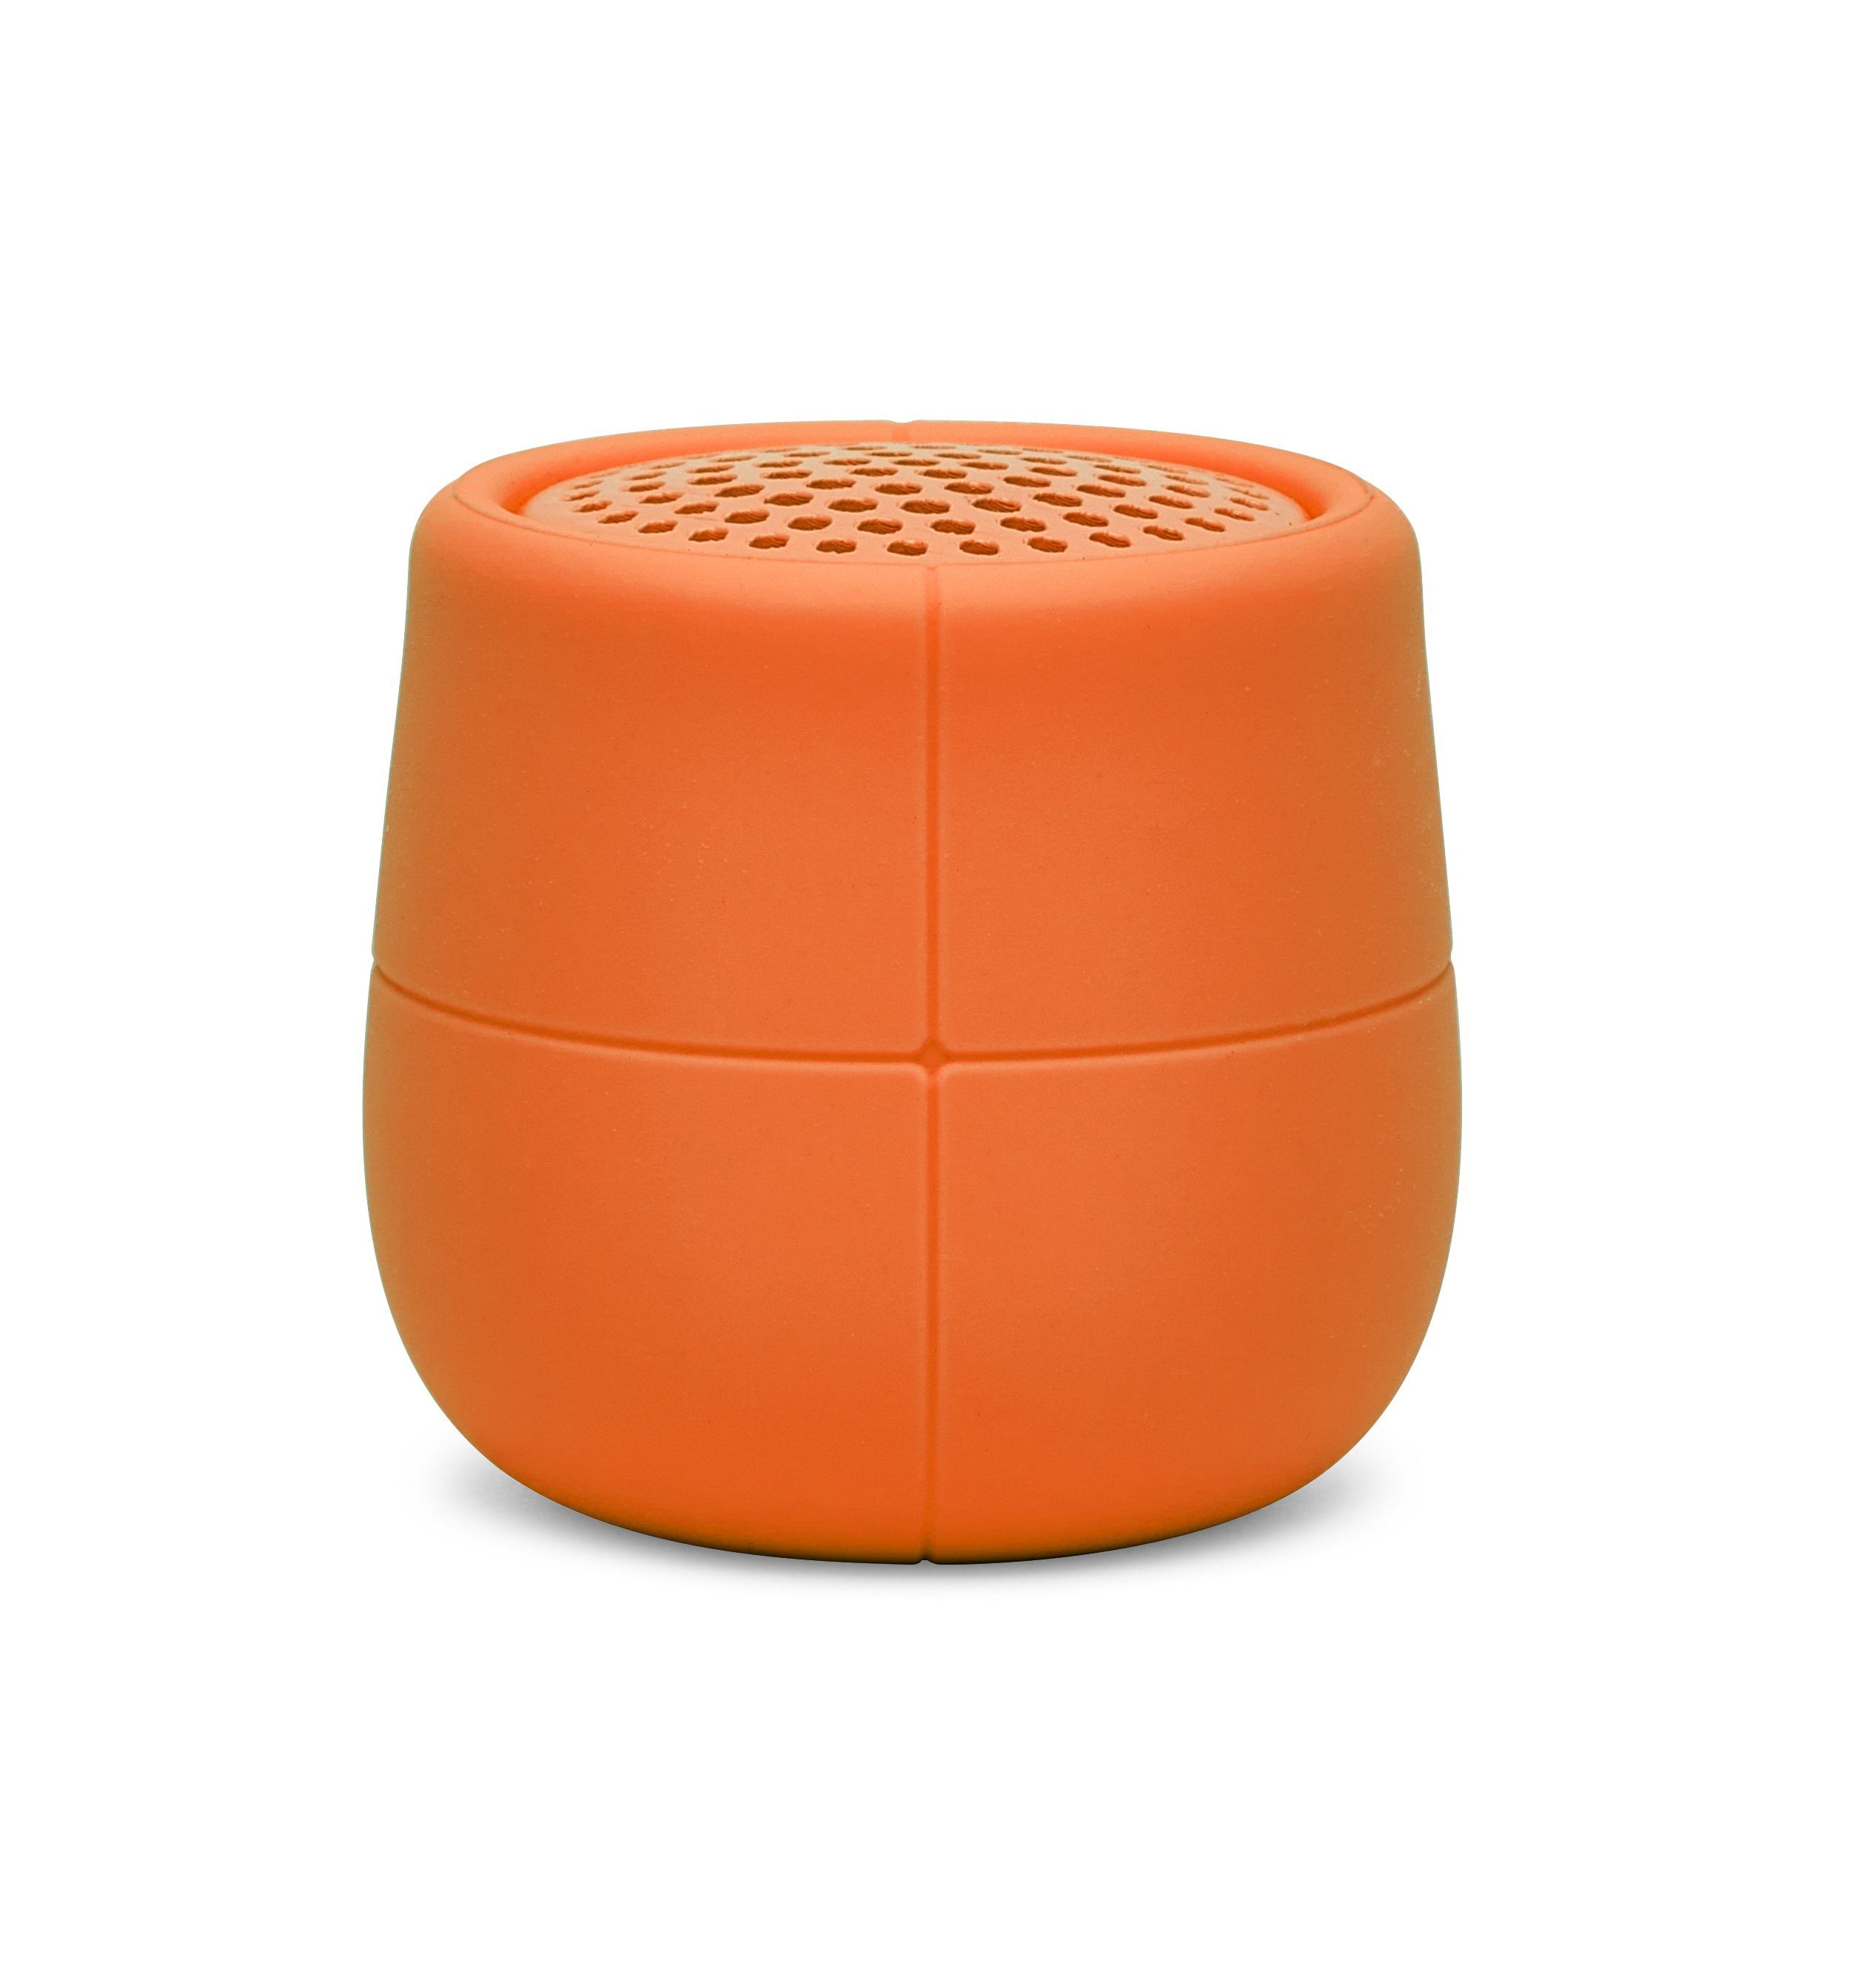 5.0) Mino Lexon X (Bluetooth Bluetooth-Lautsprecher orange